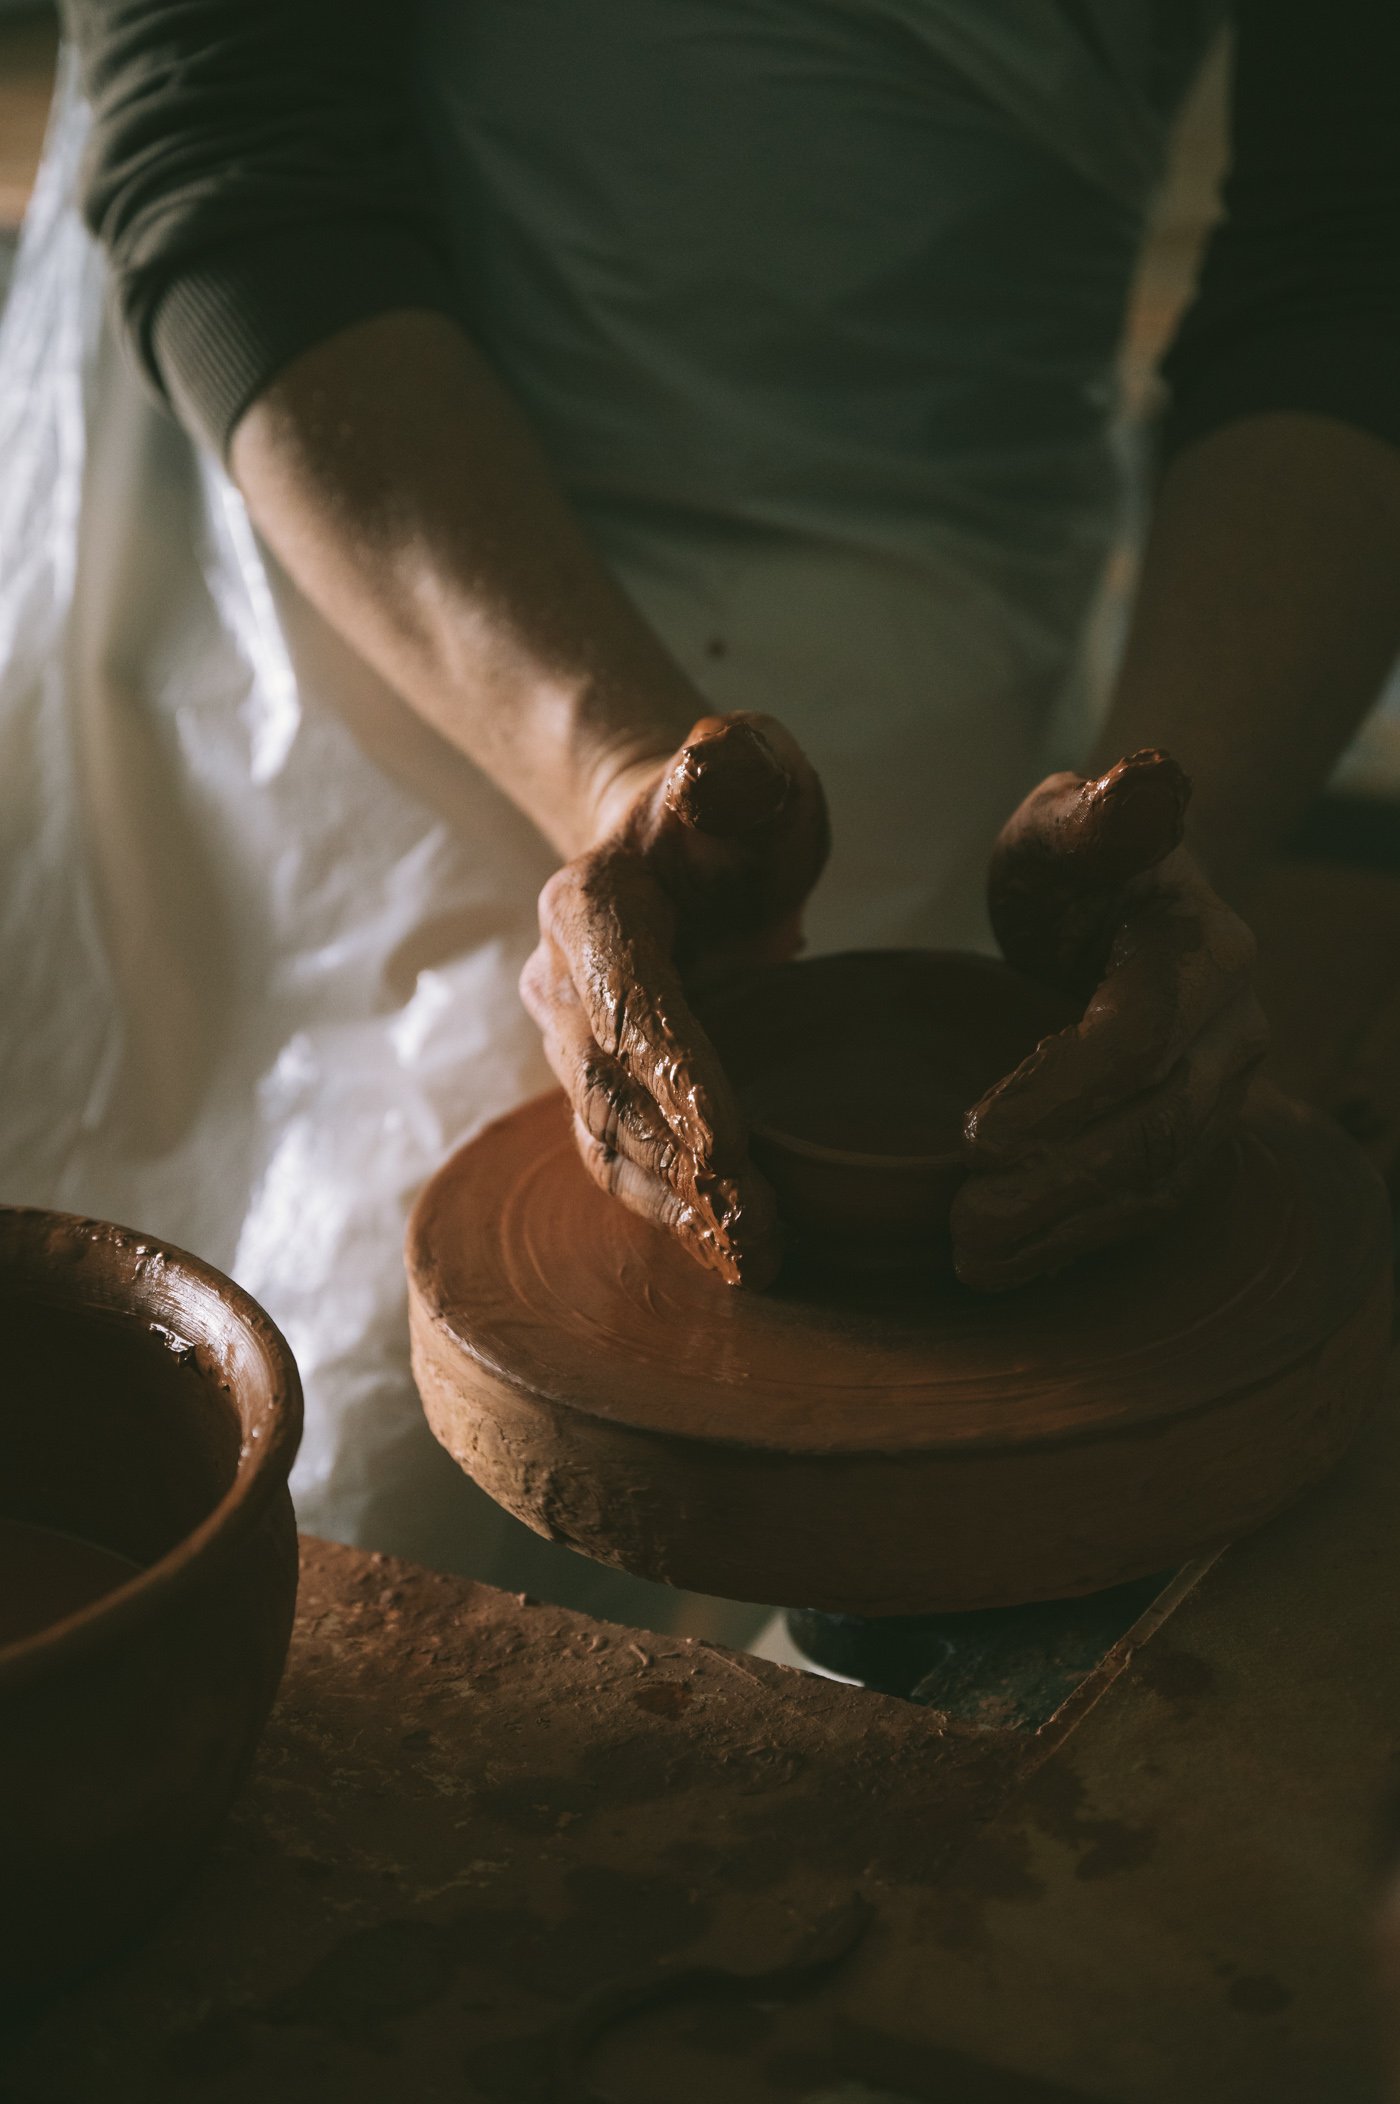 Pottery workshop at São Lourenço do Barrocal farmstay retreat in the Alentejo region of Portugal